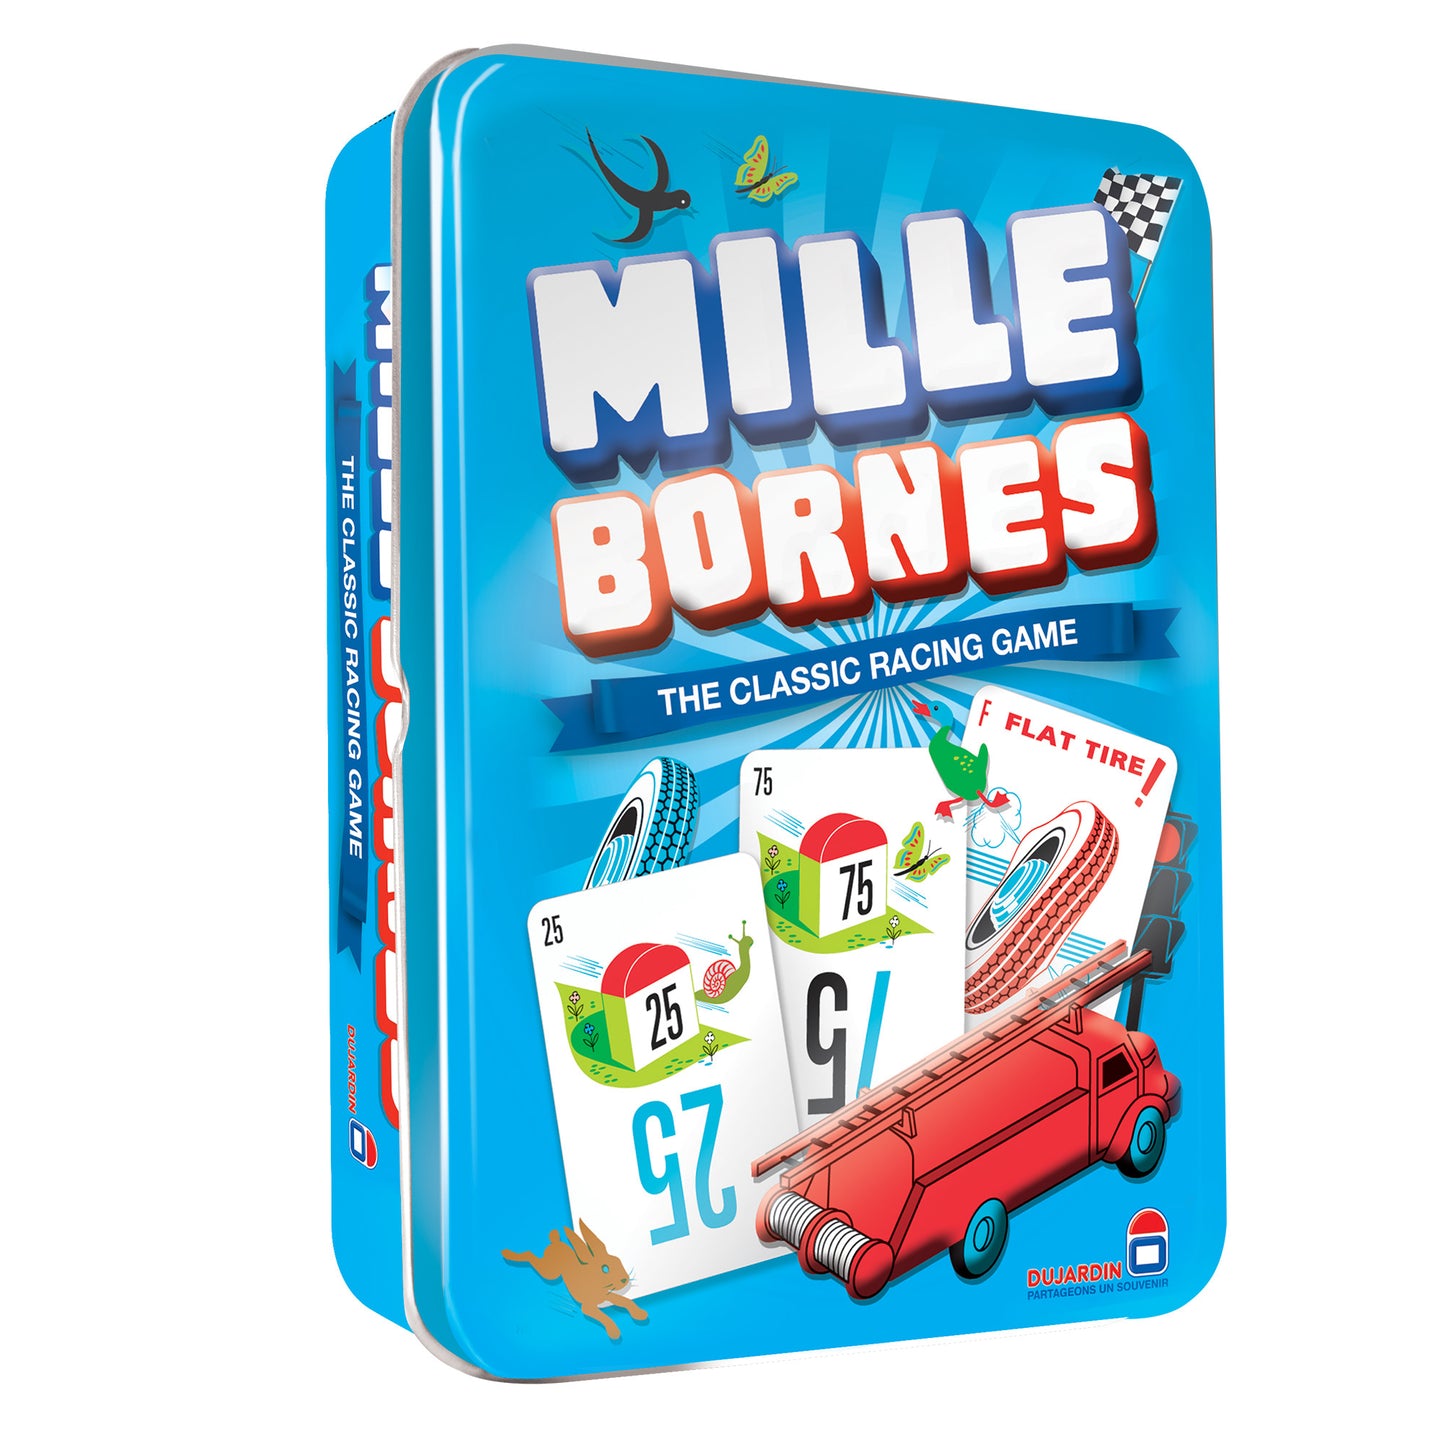 Mille Bornes Classic Racing Card Game